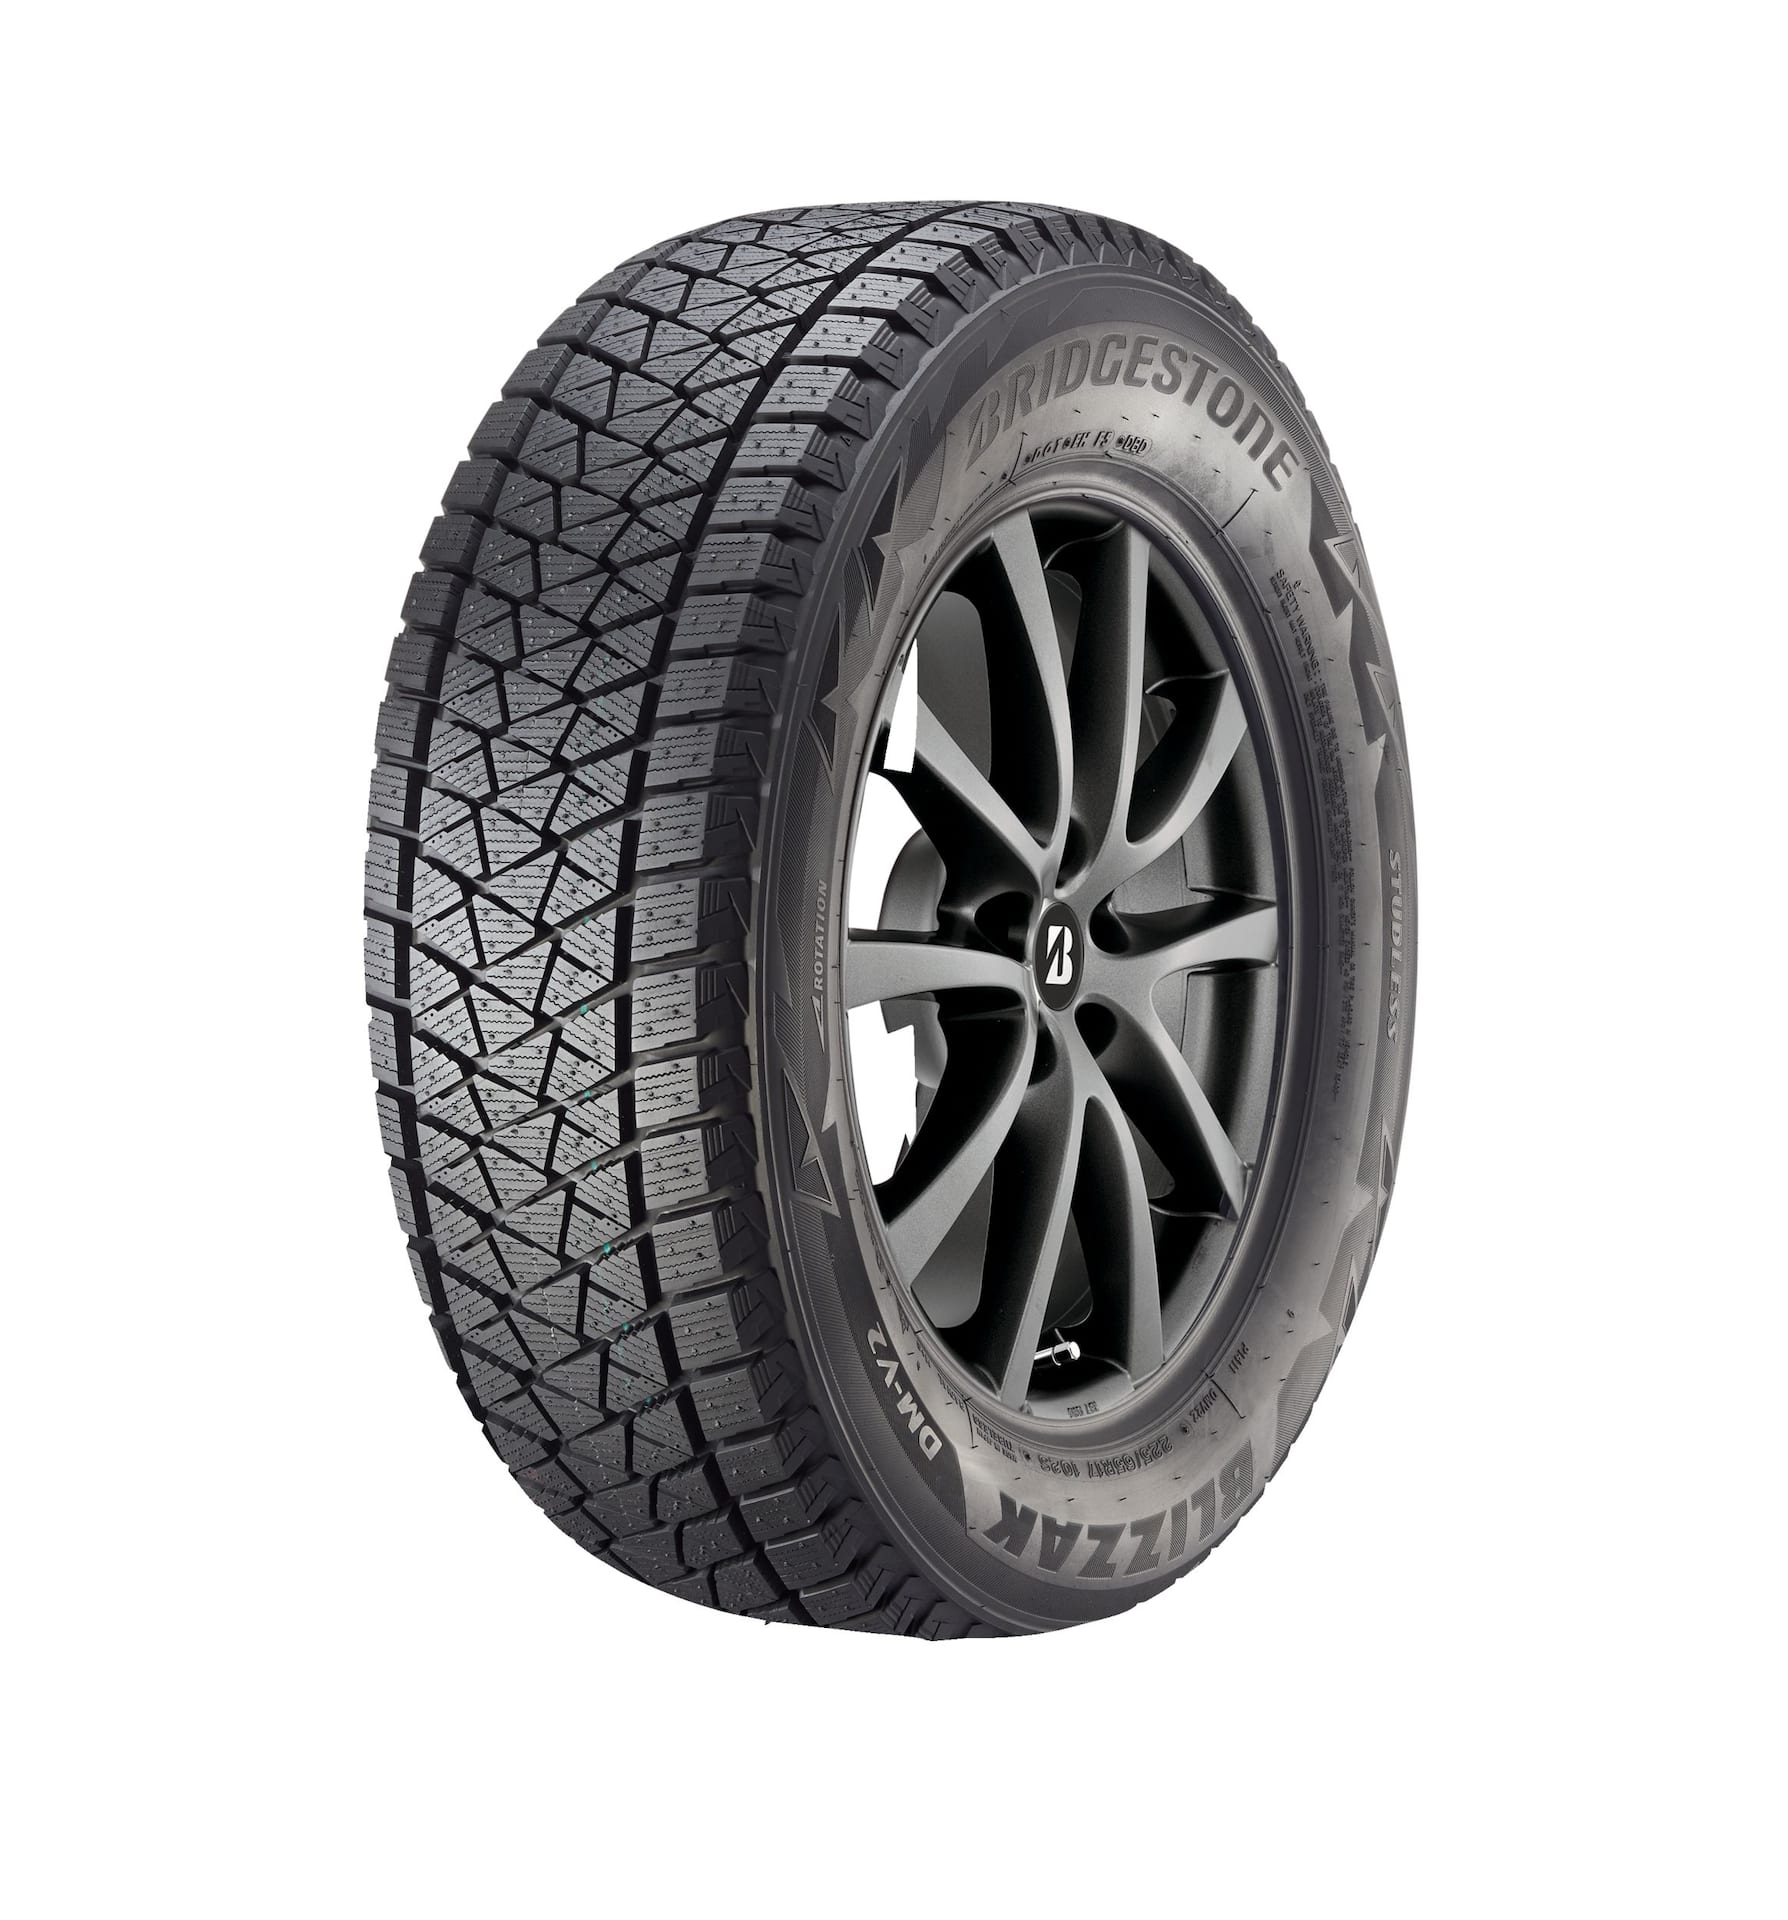 Bridgestone Blizzak DM V2 Winter Tire For Passenger & CUV